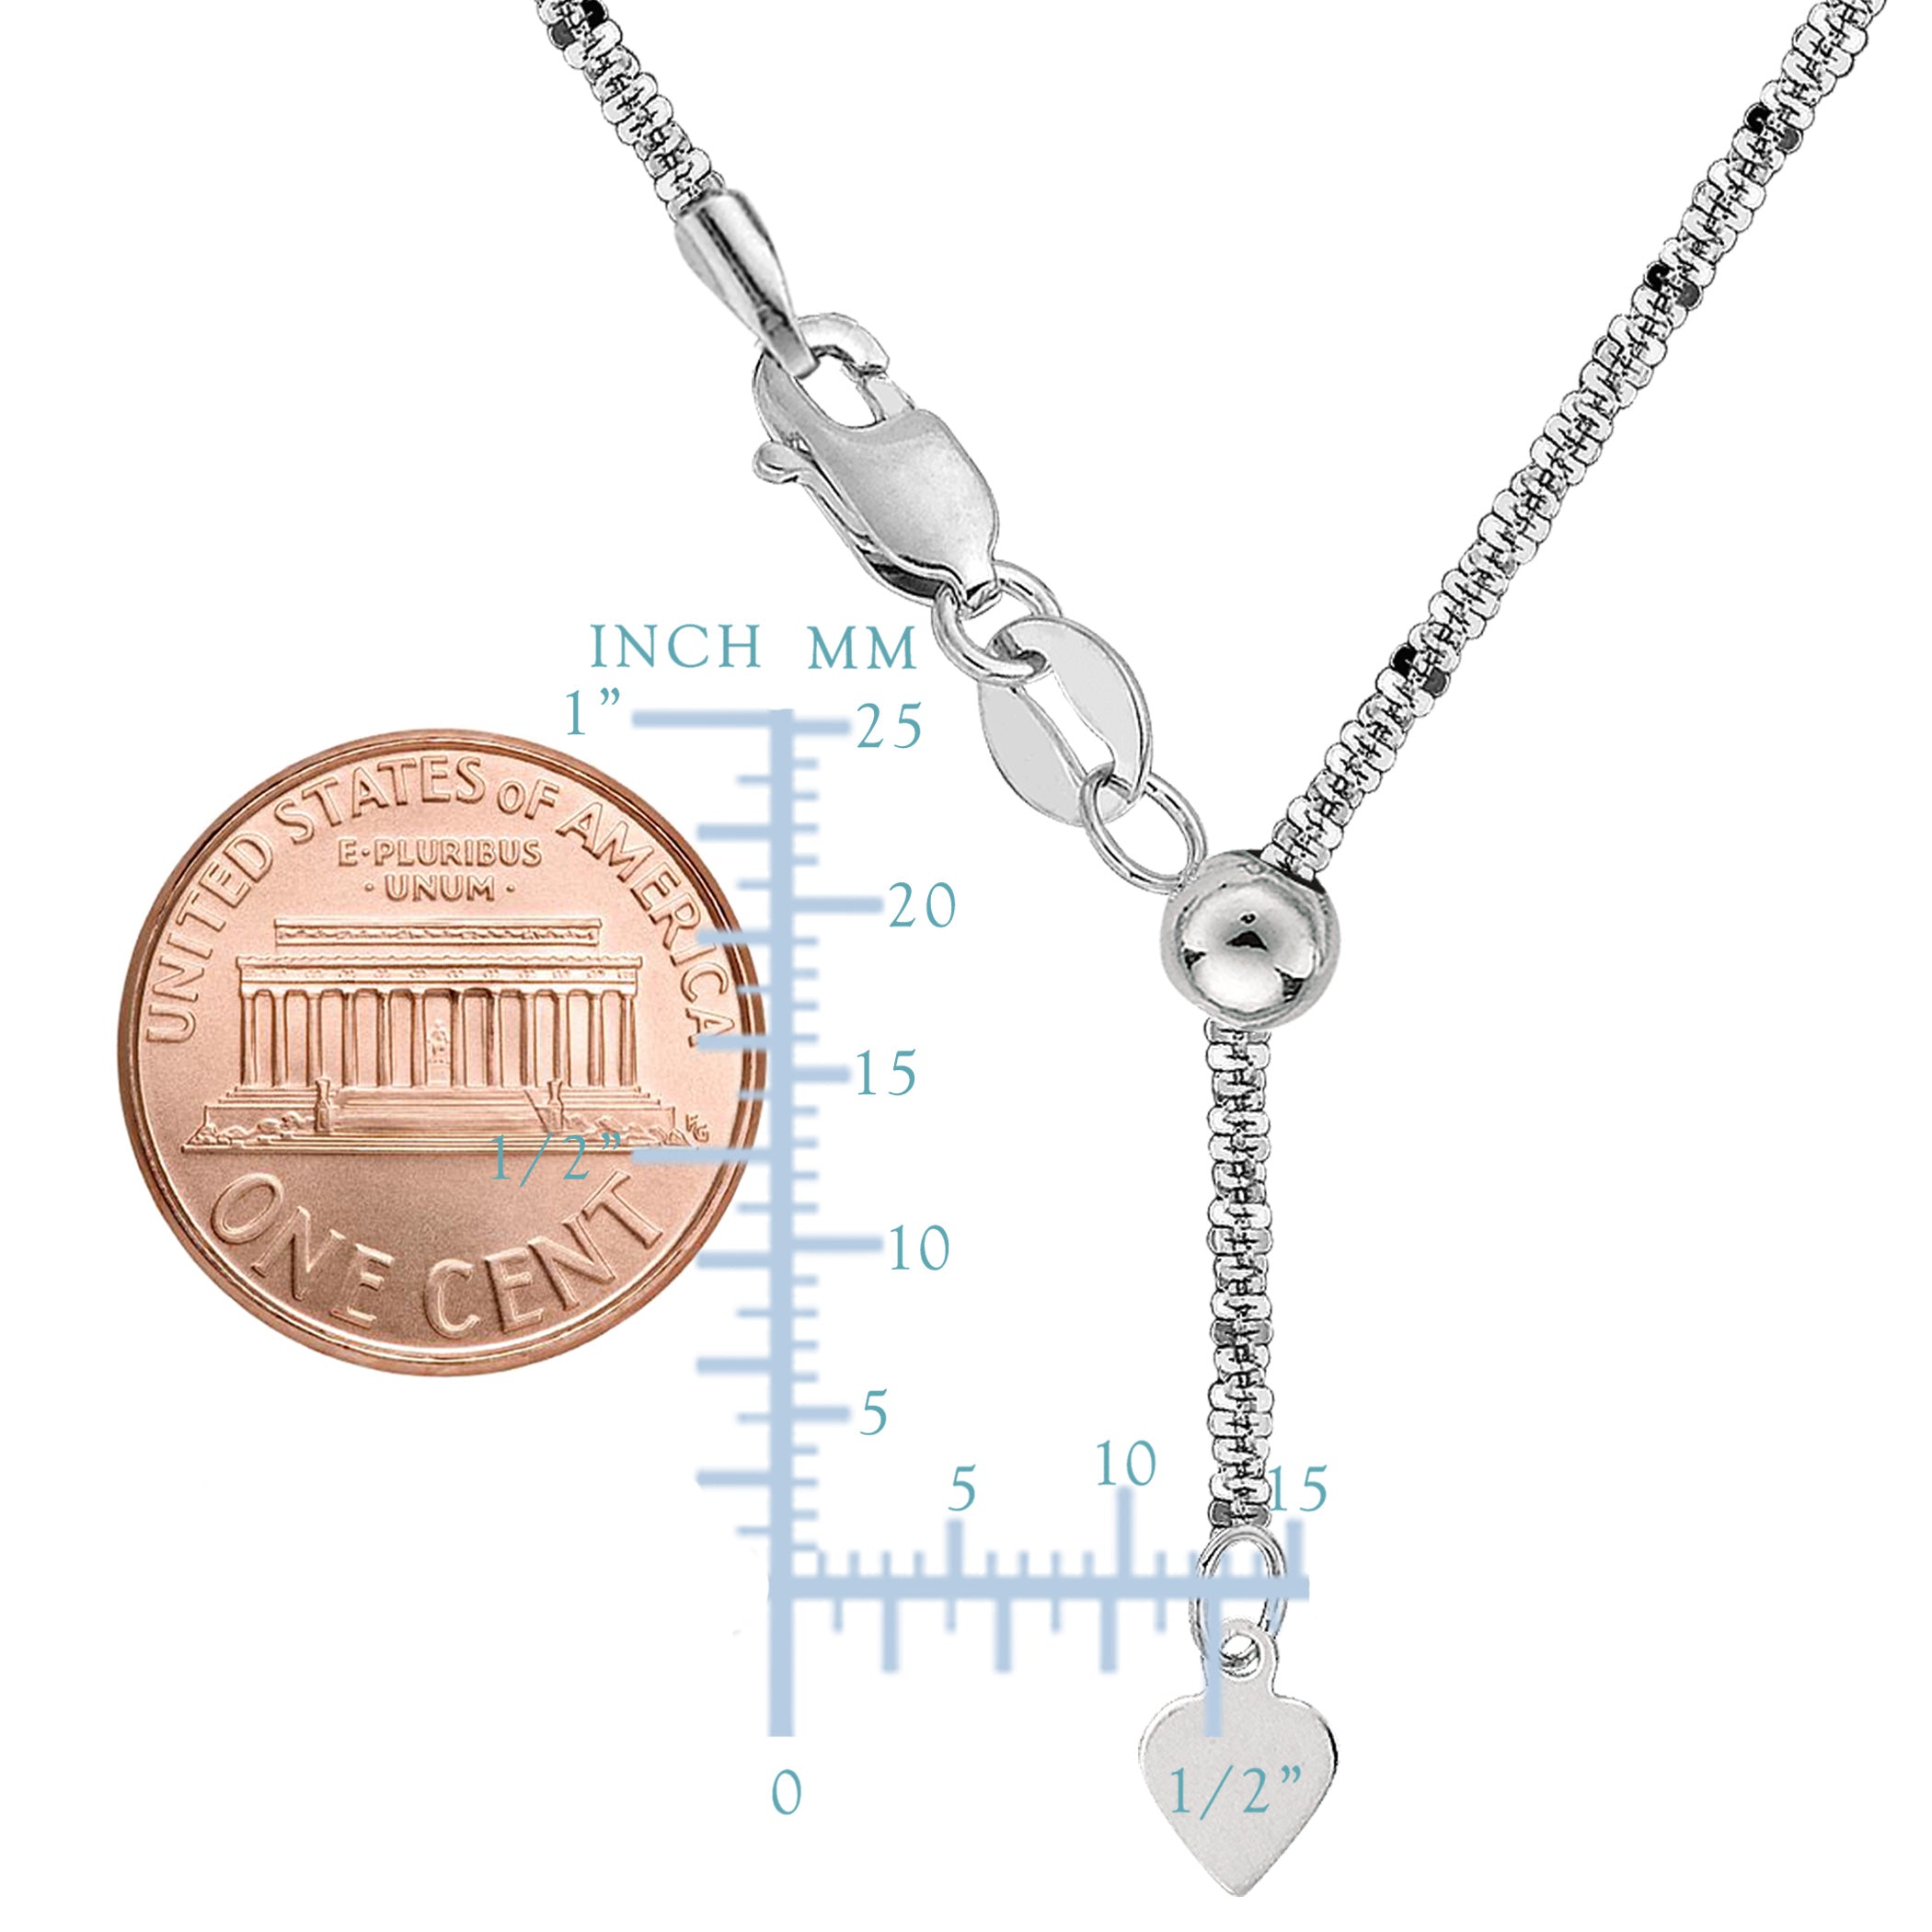 10k White Gold Adjustable Sparkle Link Chain Necklace, 1.5mm, 22"